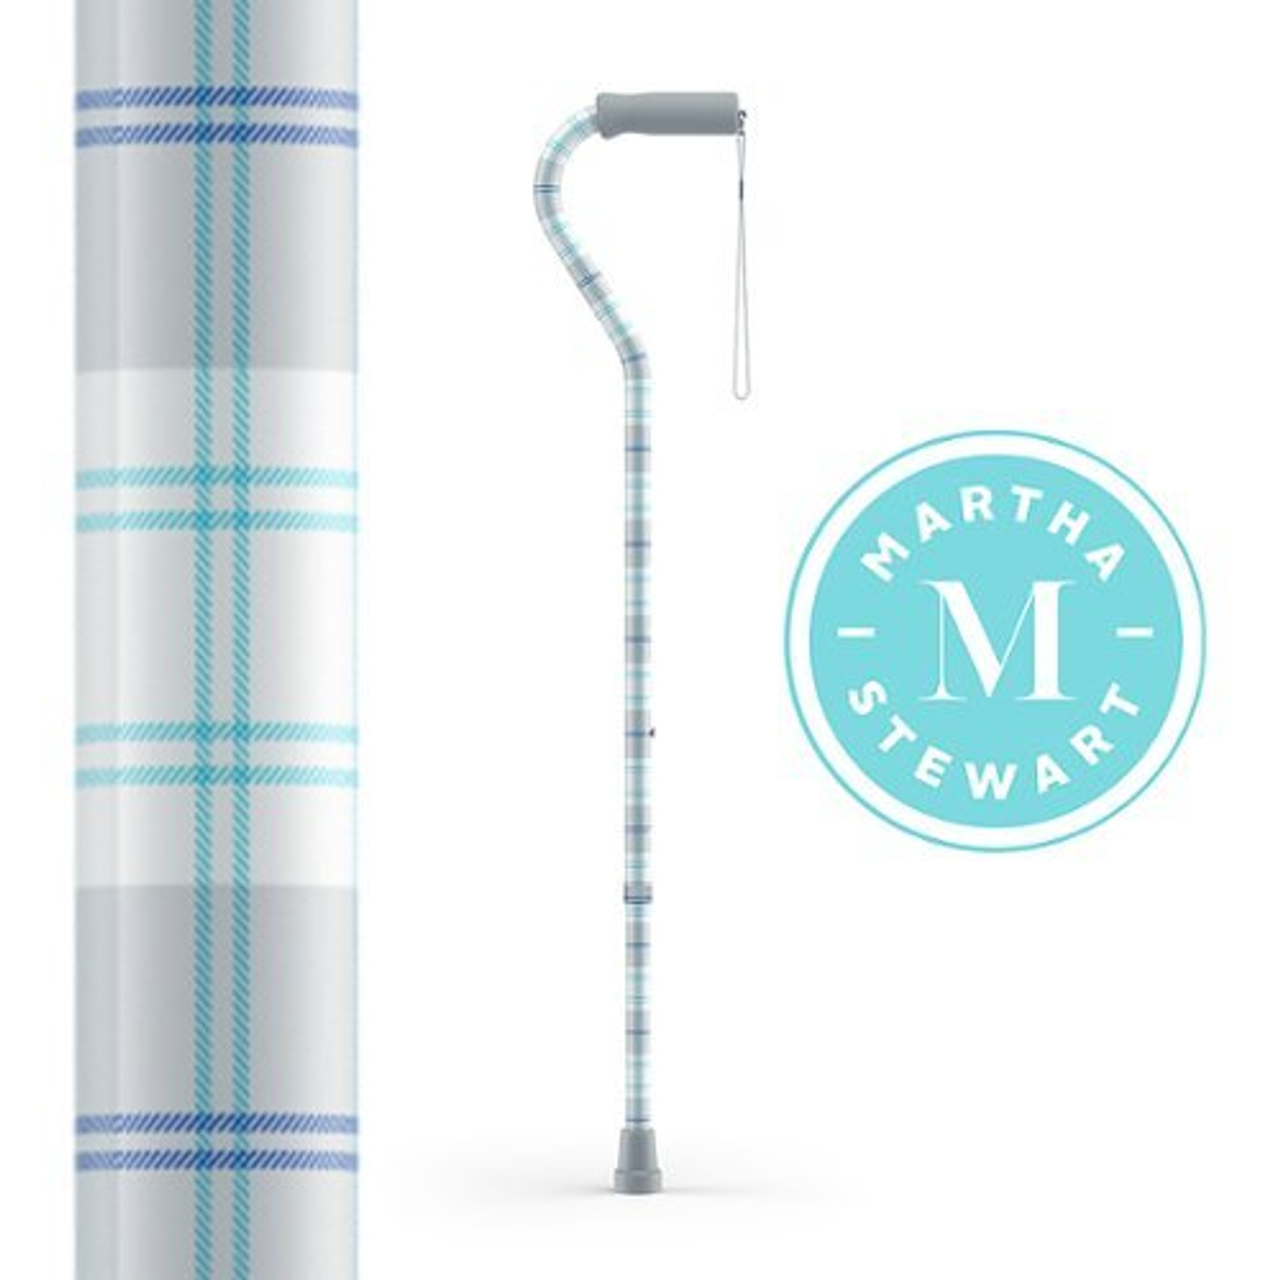 Martha Stewart - Medline Matha Stewart Adjustable Offset Cane, Fashion Walking Cane, Supports up to 250 lbs., Plaid - multi